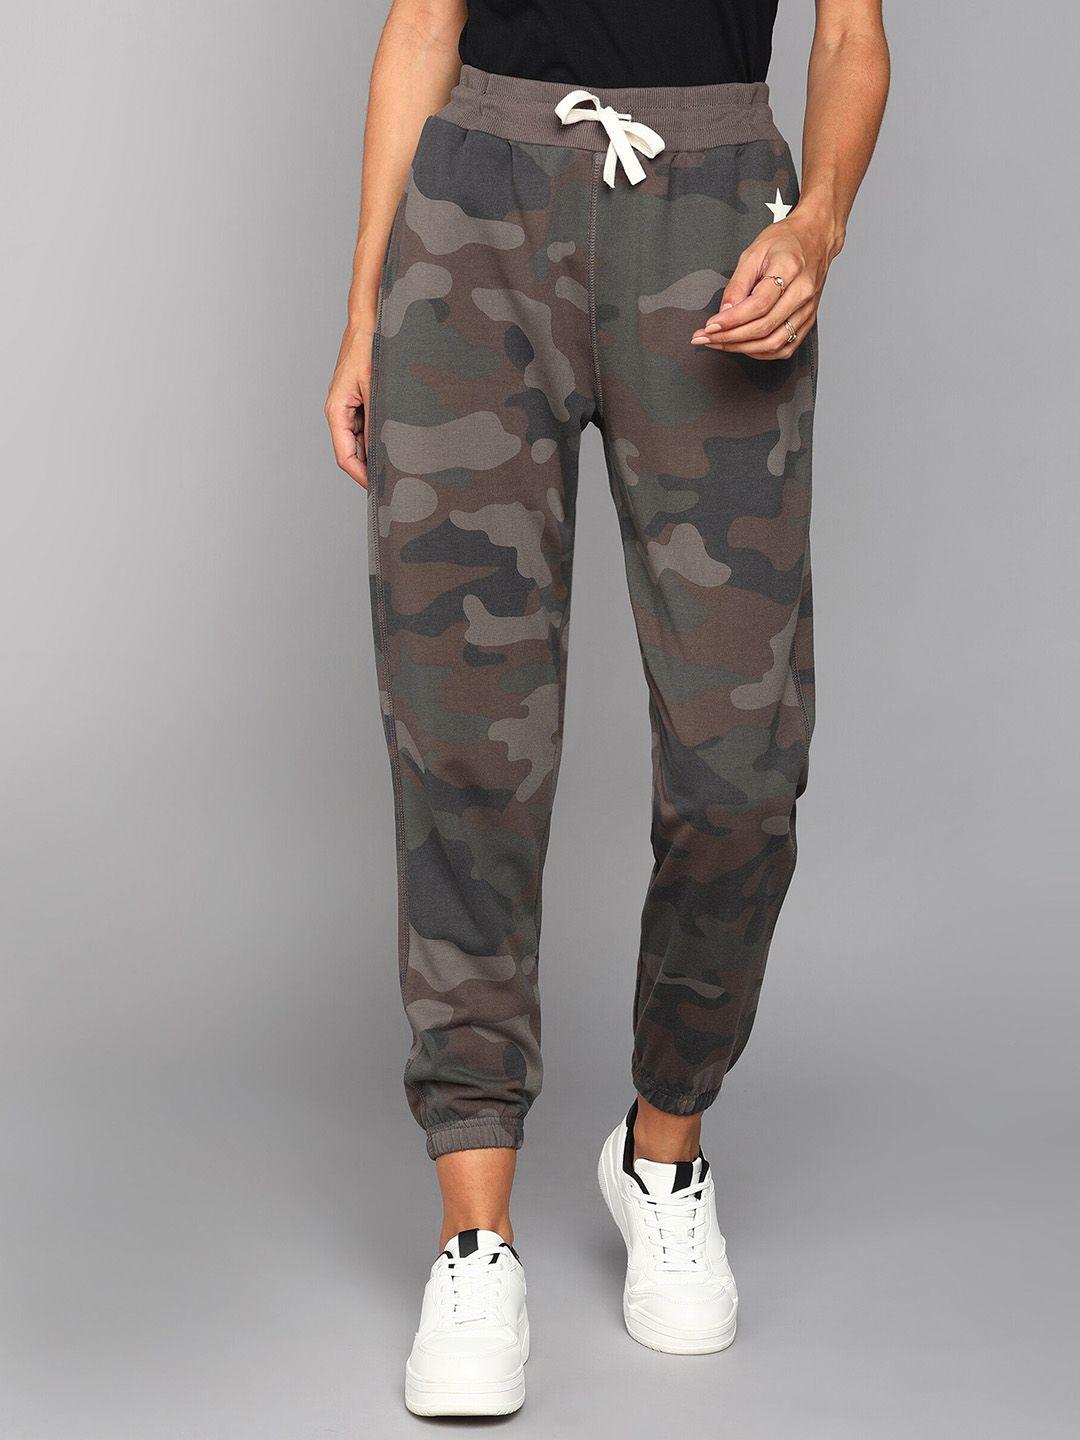 alan jones women camouflage printed regular fit cotton joggers track pants